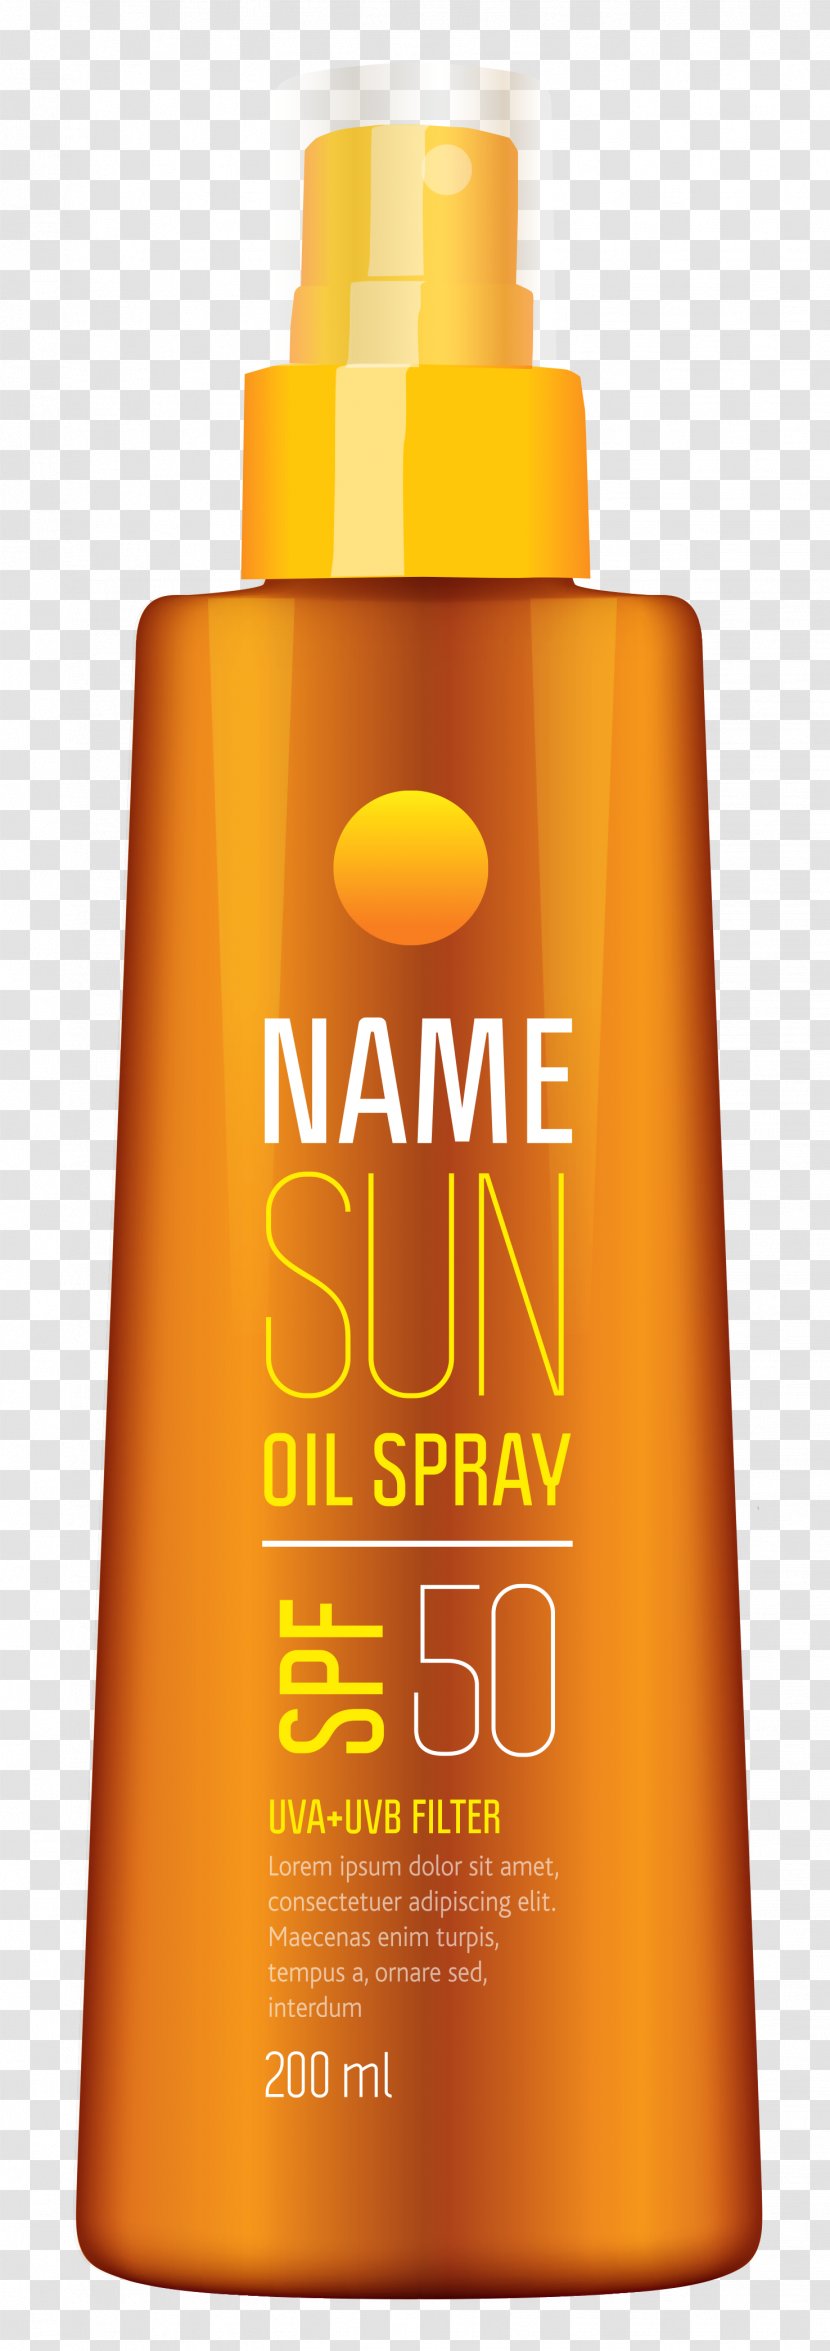 Sunscreen Lotion Lipstick Clip Art - Mascara - Sun Oil Spray Clipart Picture Transparent PNG